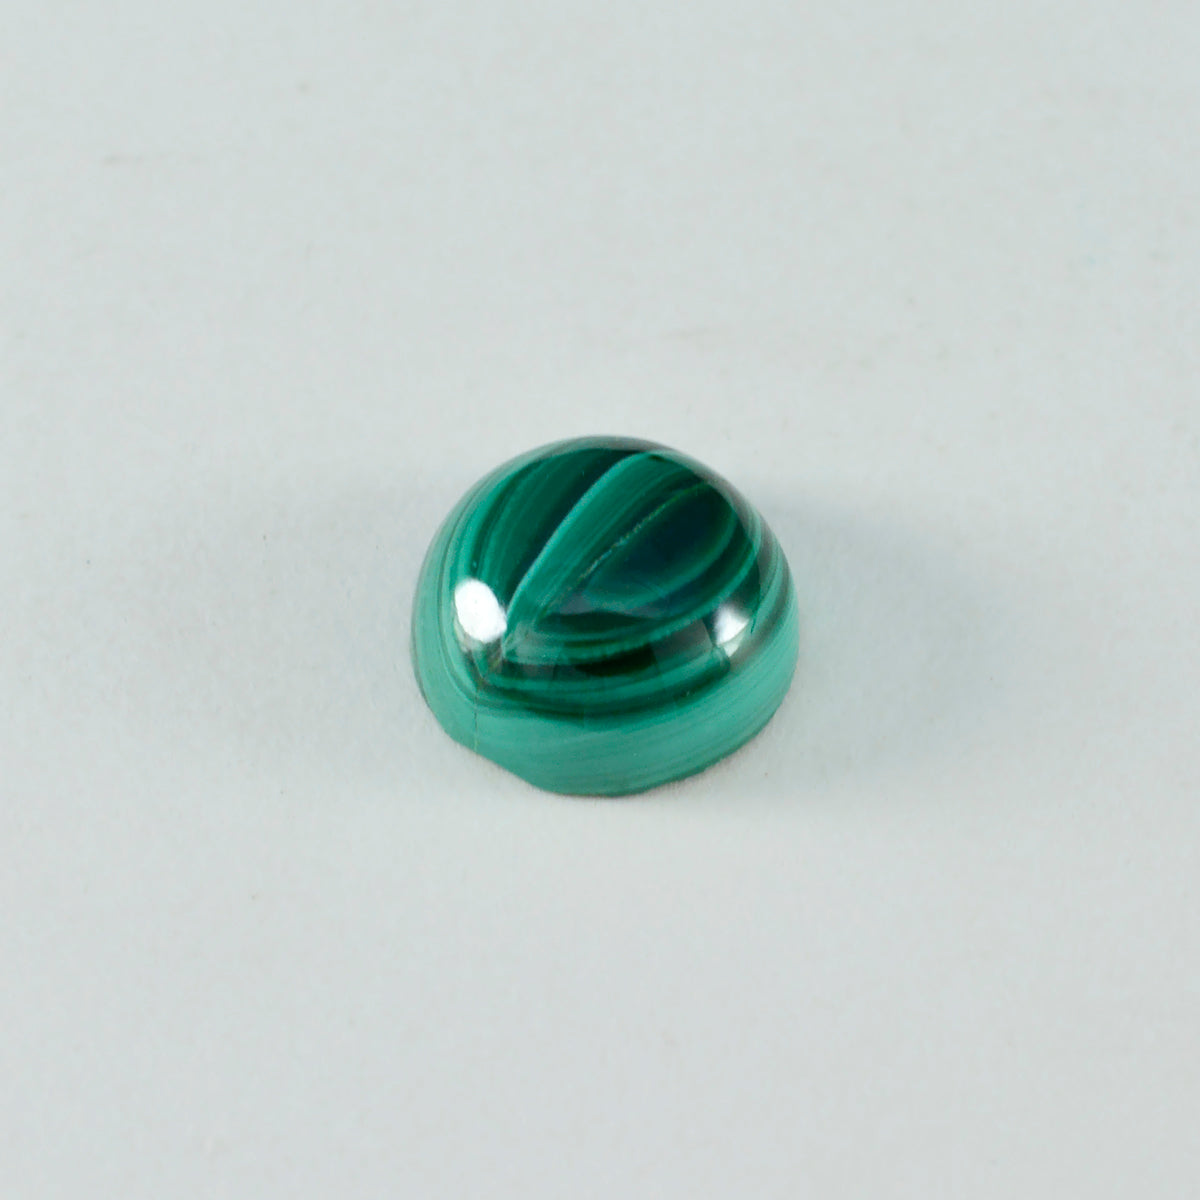 Riyogems 1PC Green Malachite Cabochon 15x15 mm Round Shape sweet Quality Loose Gems